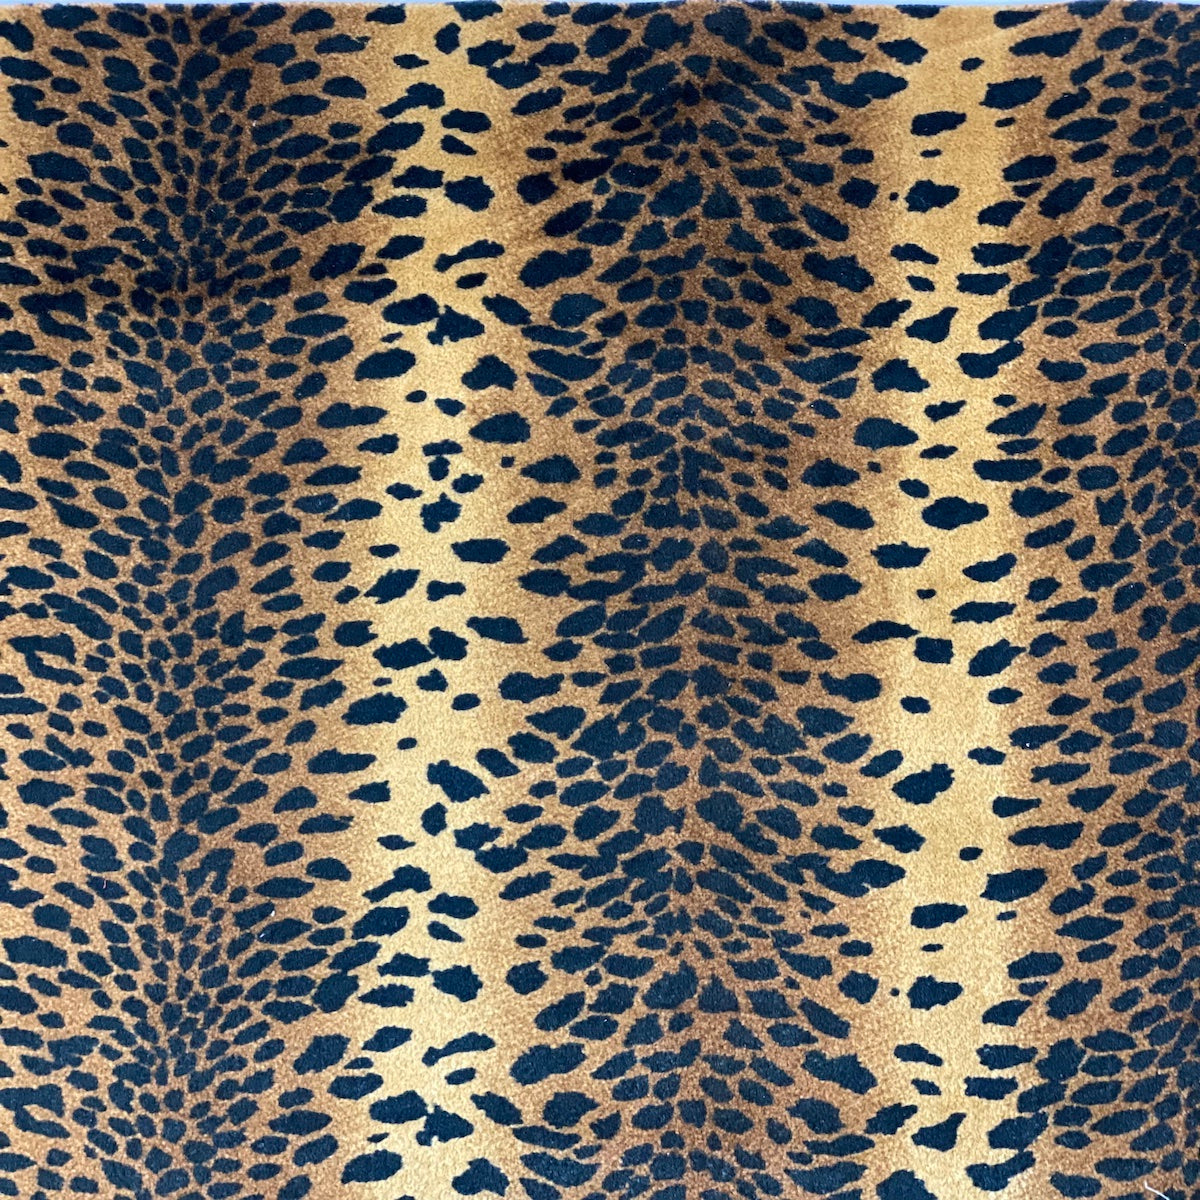 Cheetah Print Velvet Flocking Fabric - Fashion Fabrics LLC